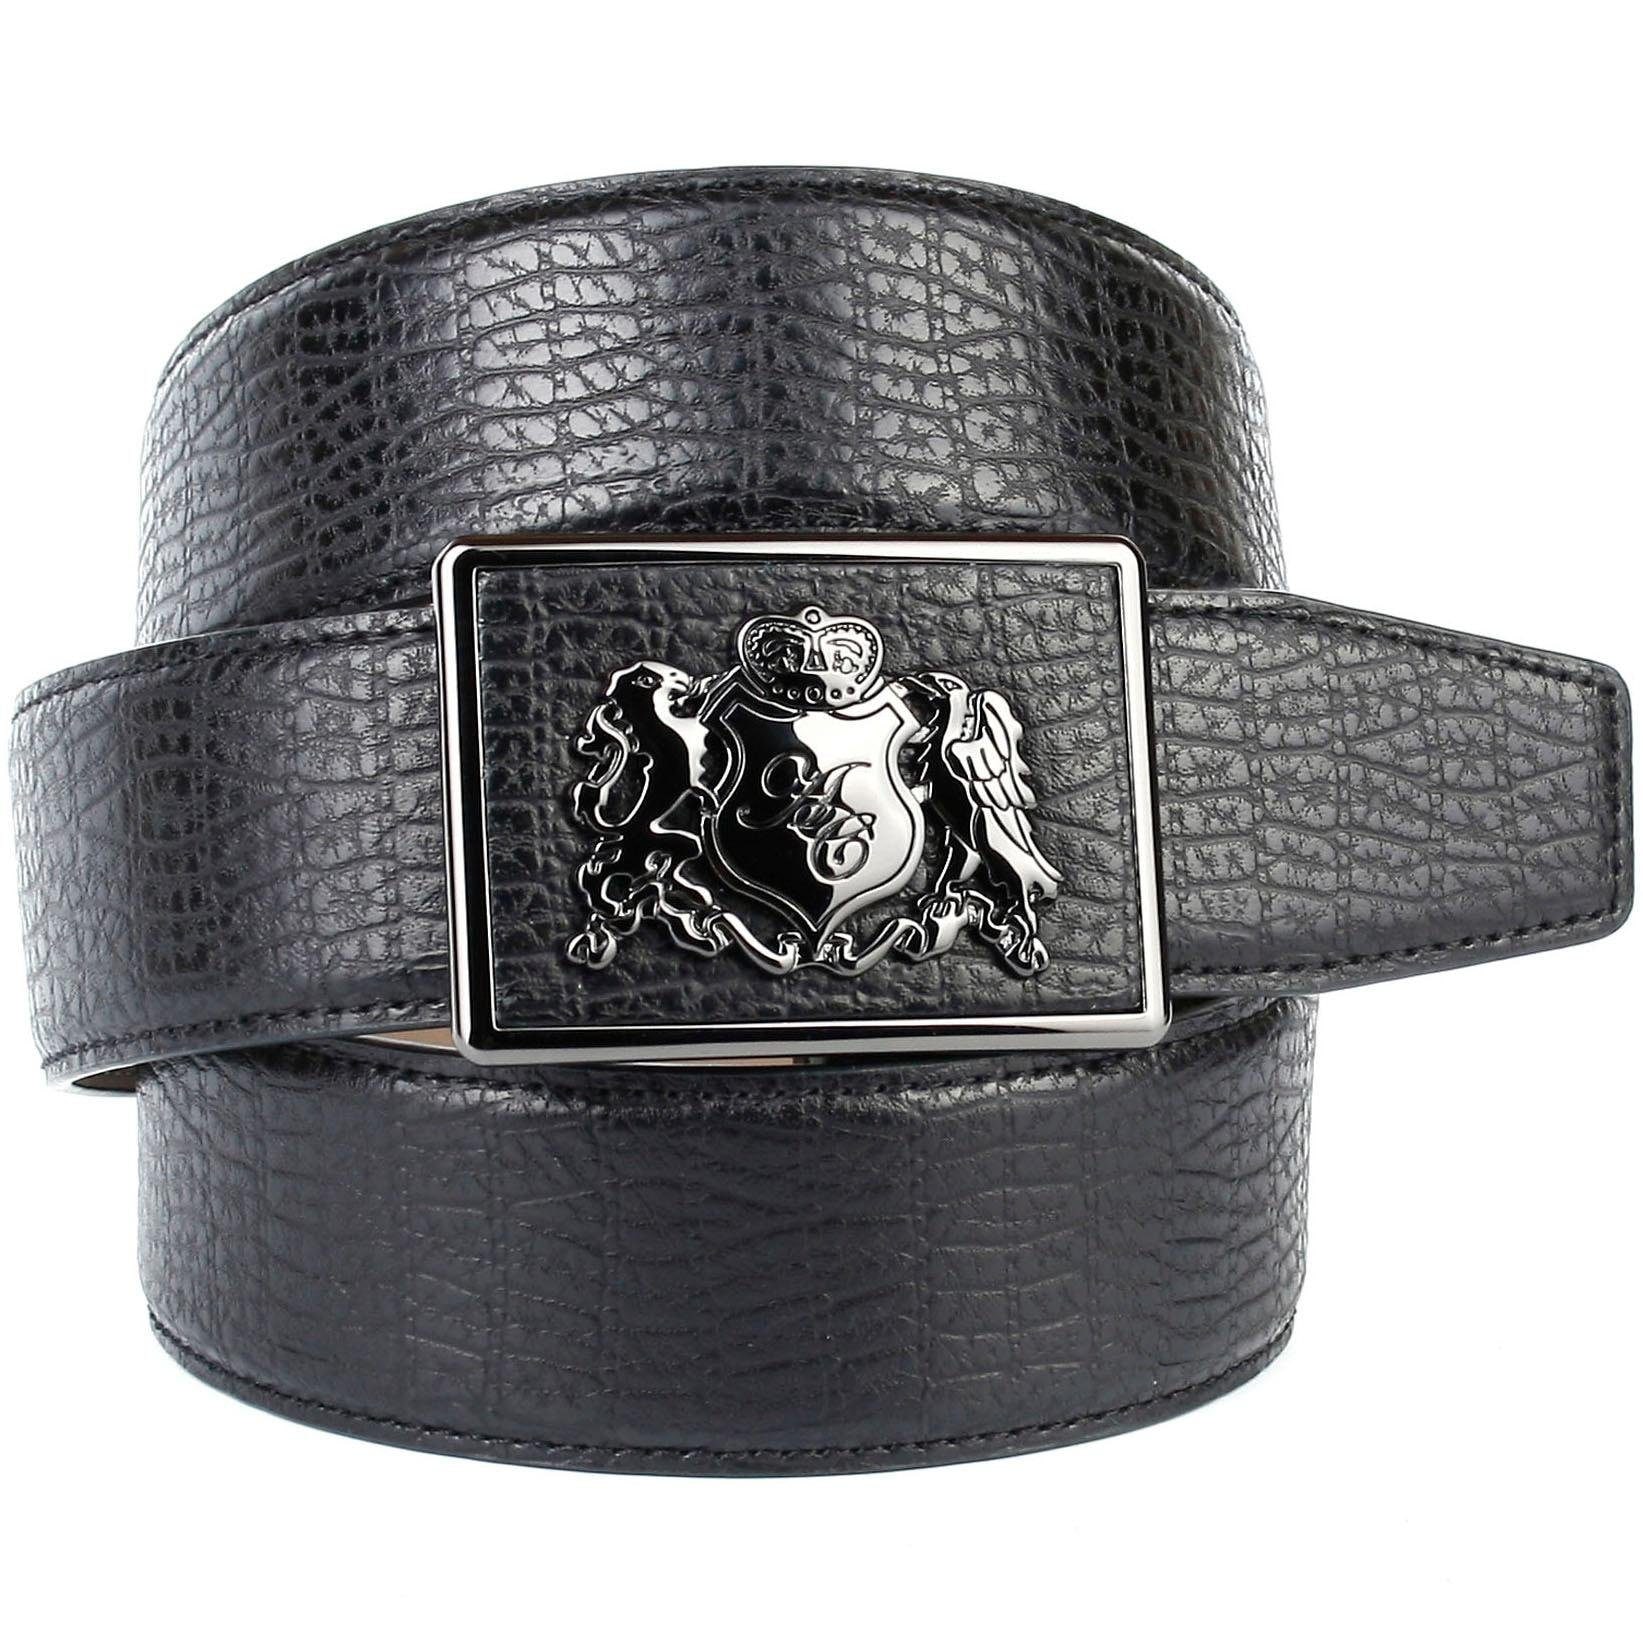 Anthoni Crown Ledergürtel, mit Anthoni Crown Wappen, Lochmuster am Rand